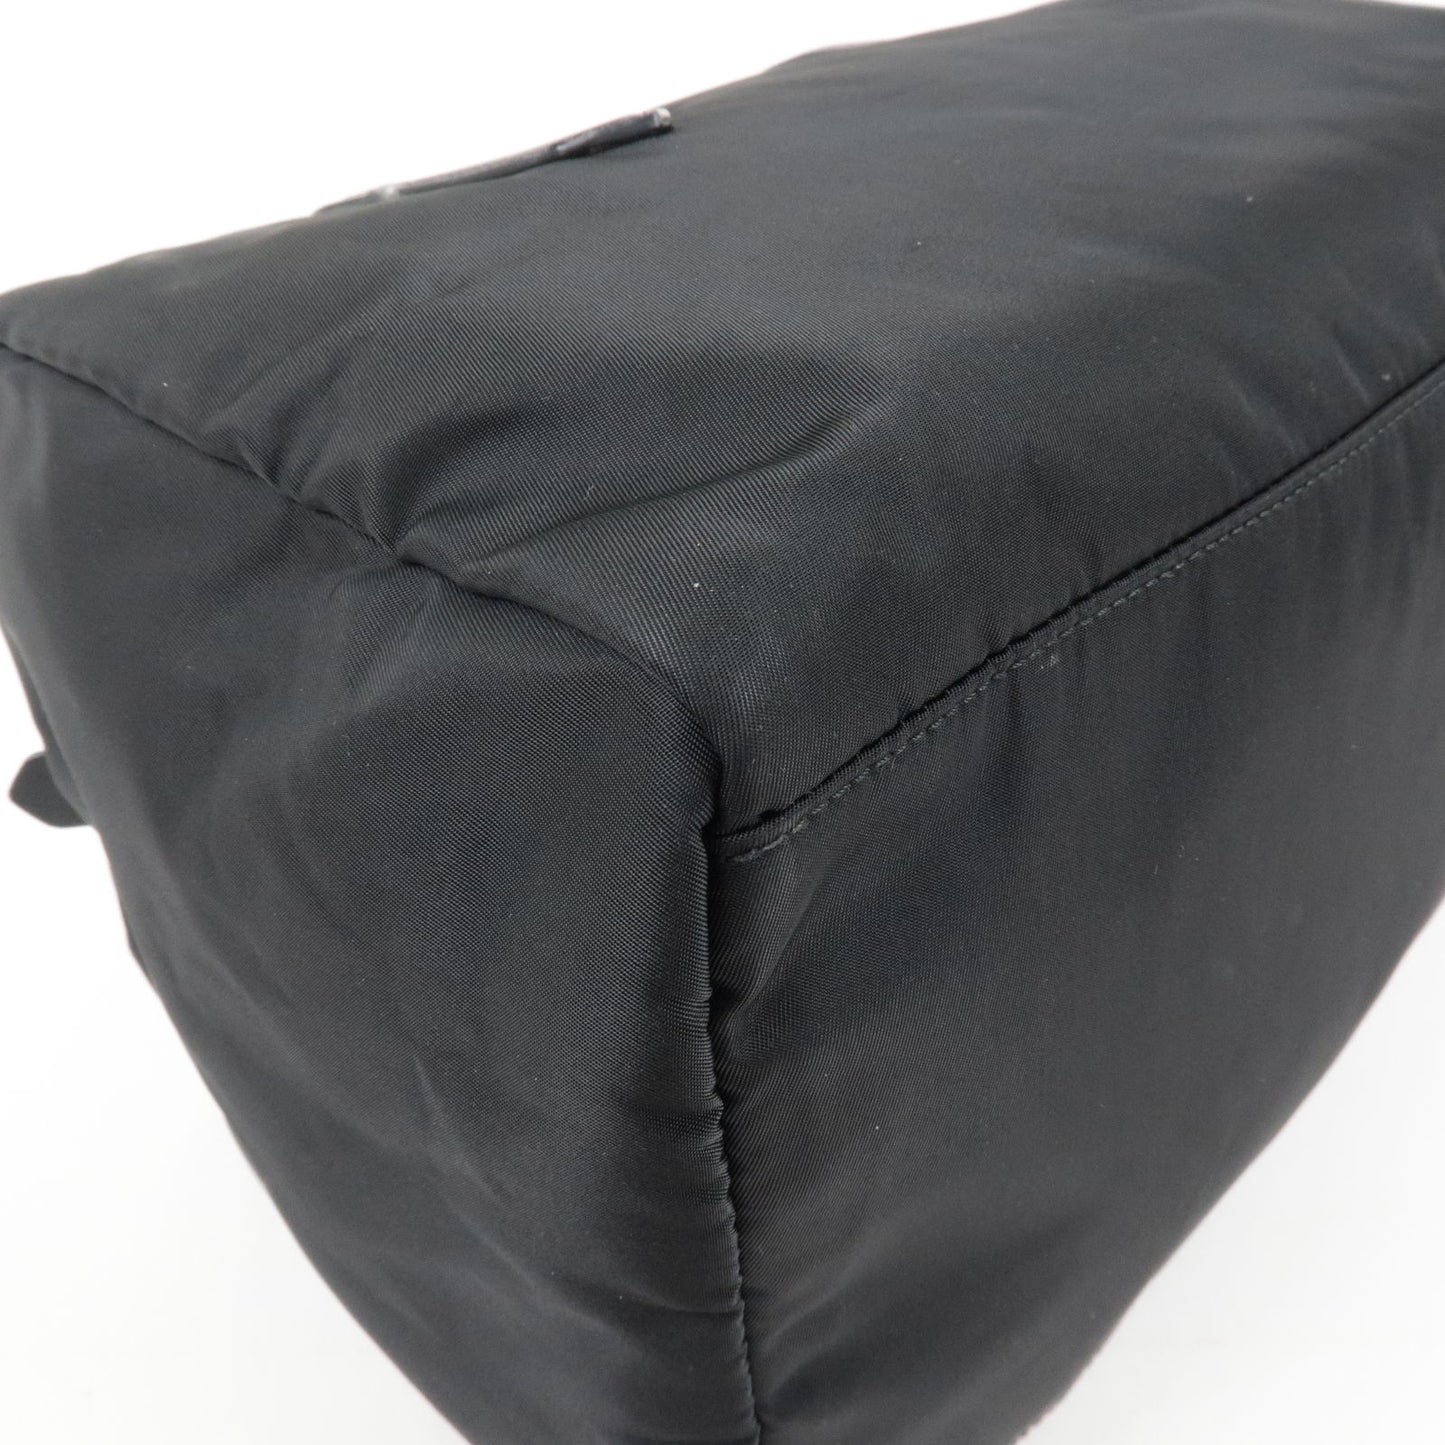 Prada, Bags, Prada Boston Bag Nylon Travel Bag Black